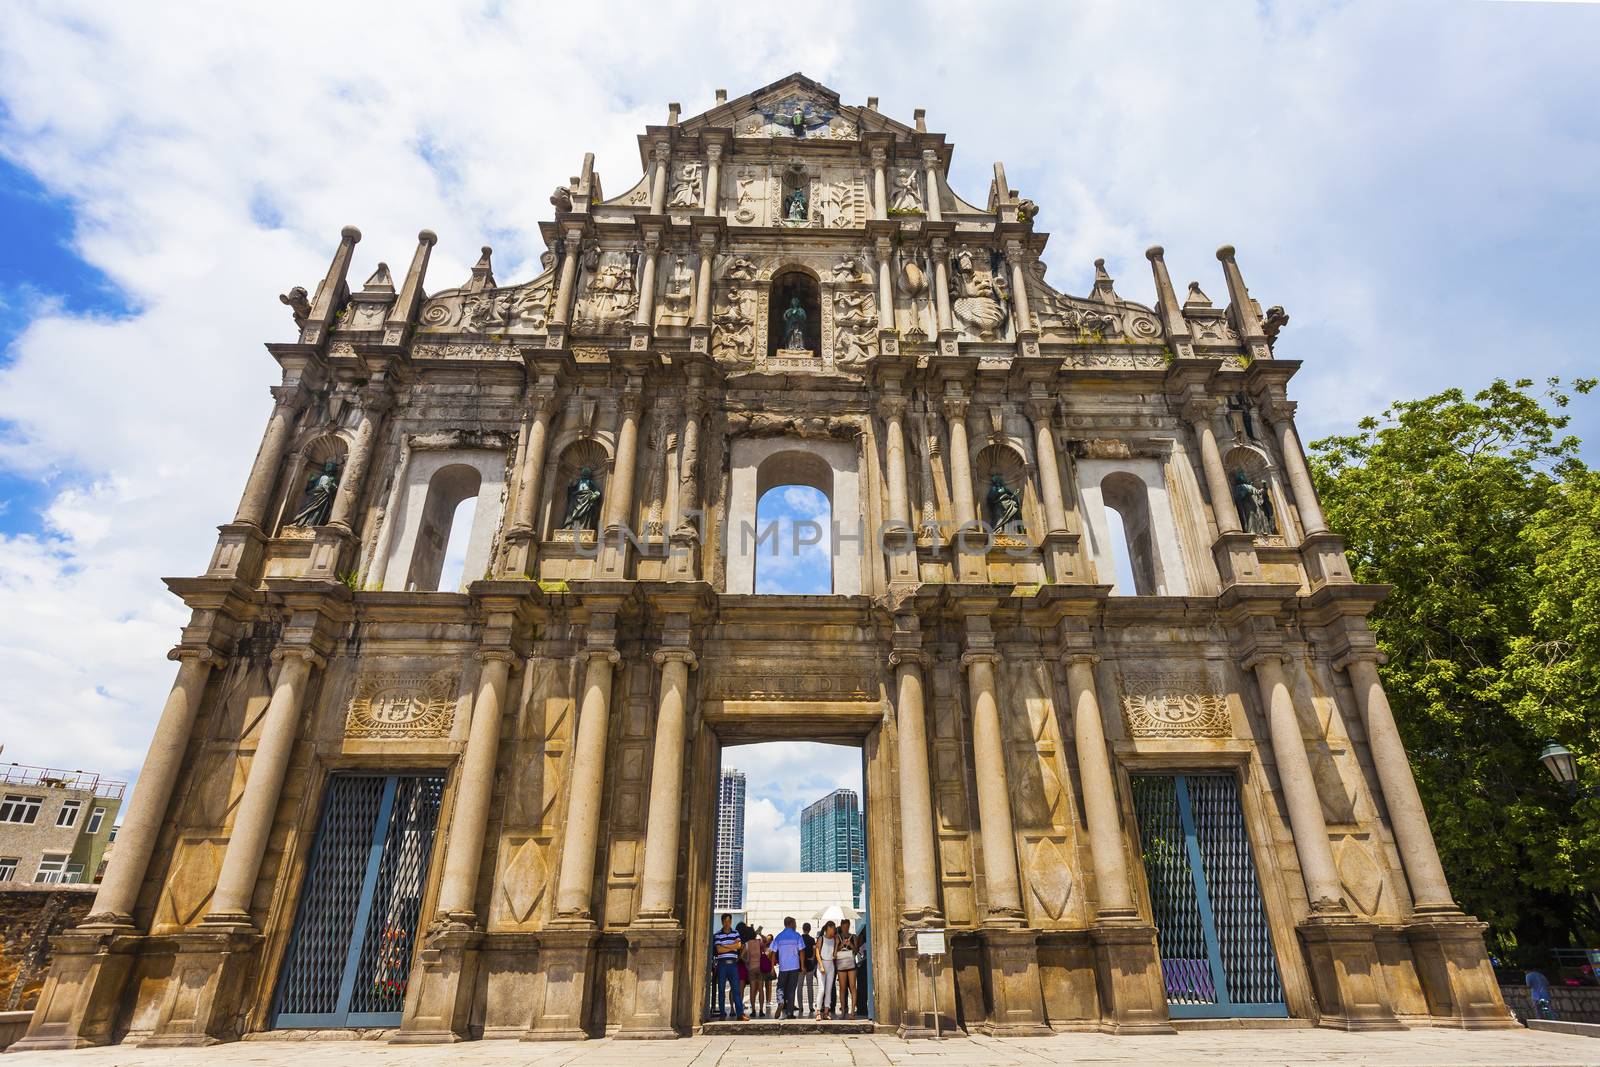 Ruins St Paul church in Macau, China by kawing921